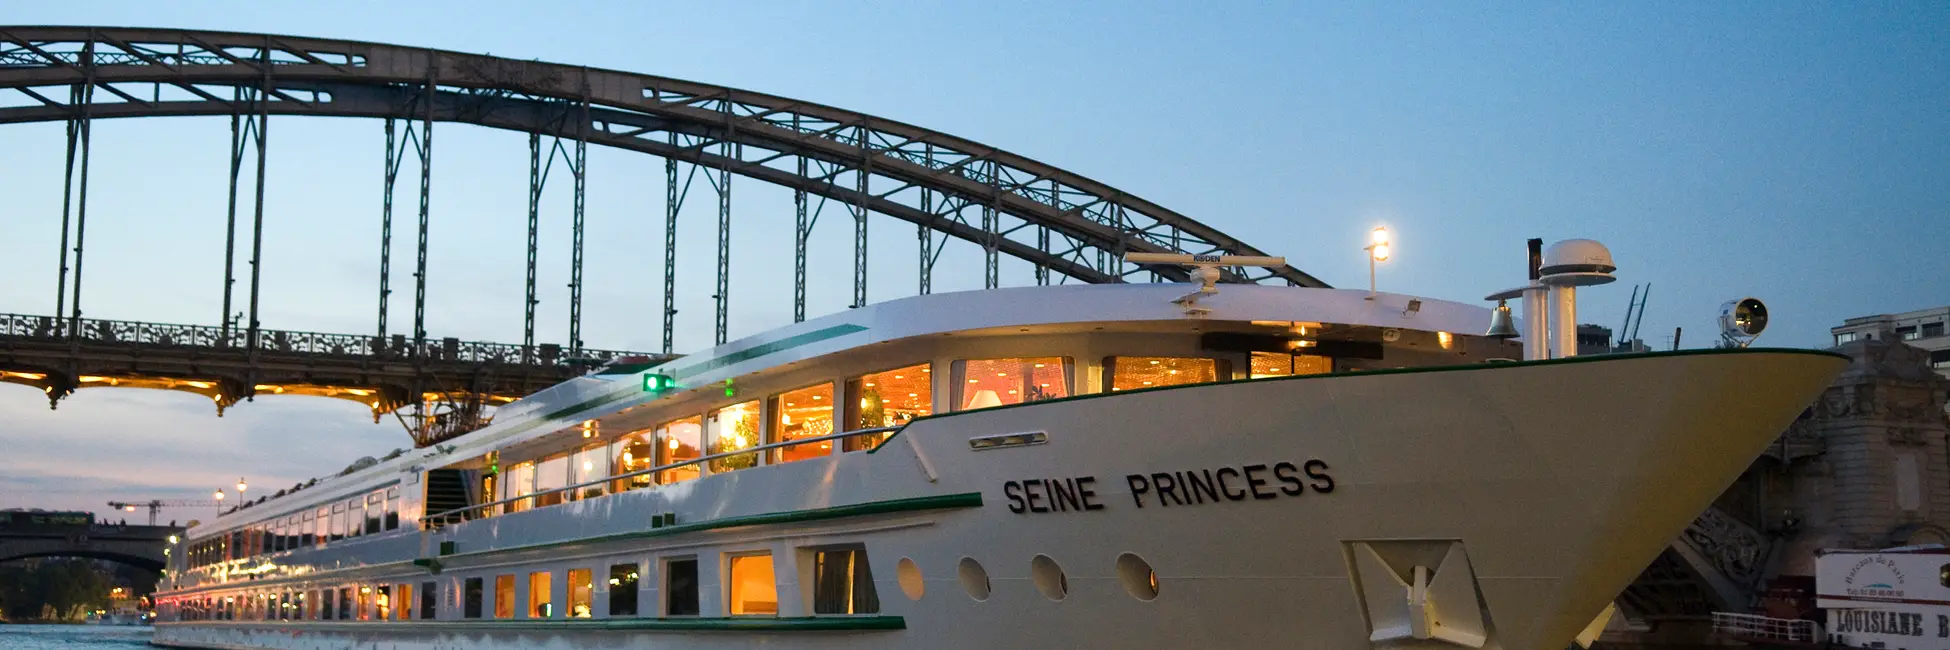 The MS Seine Princess is cruising